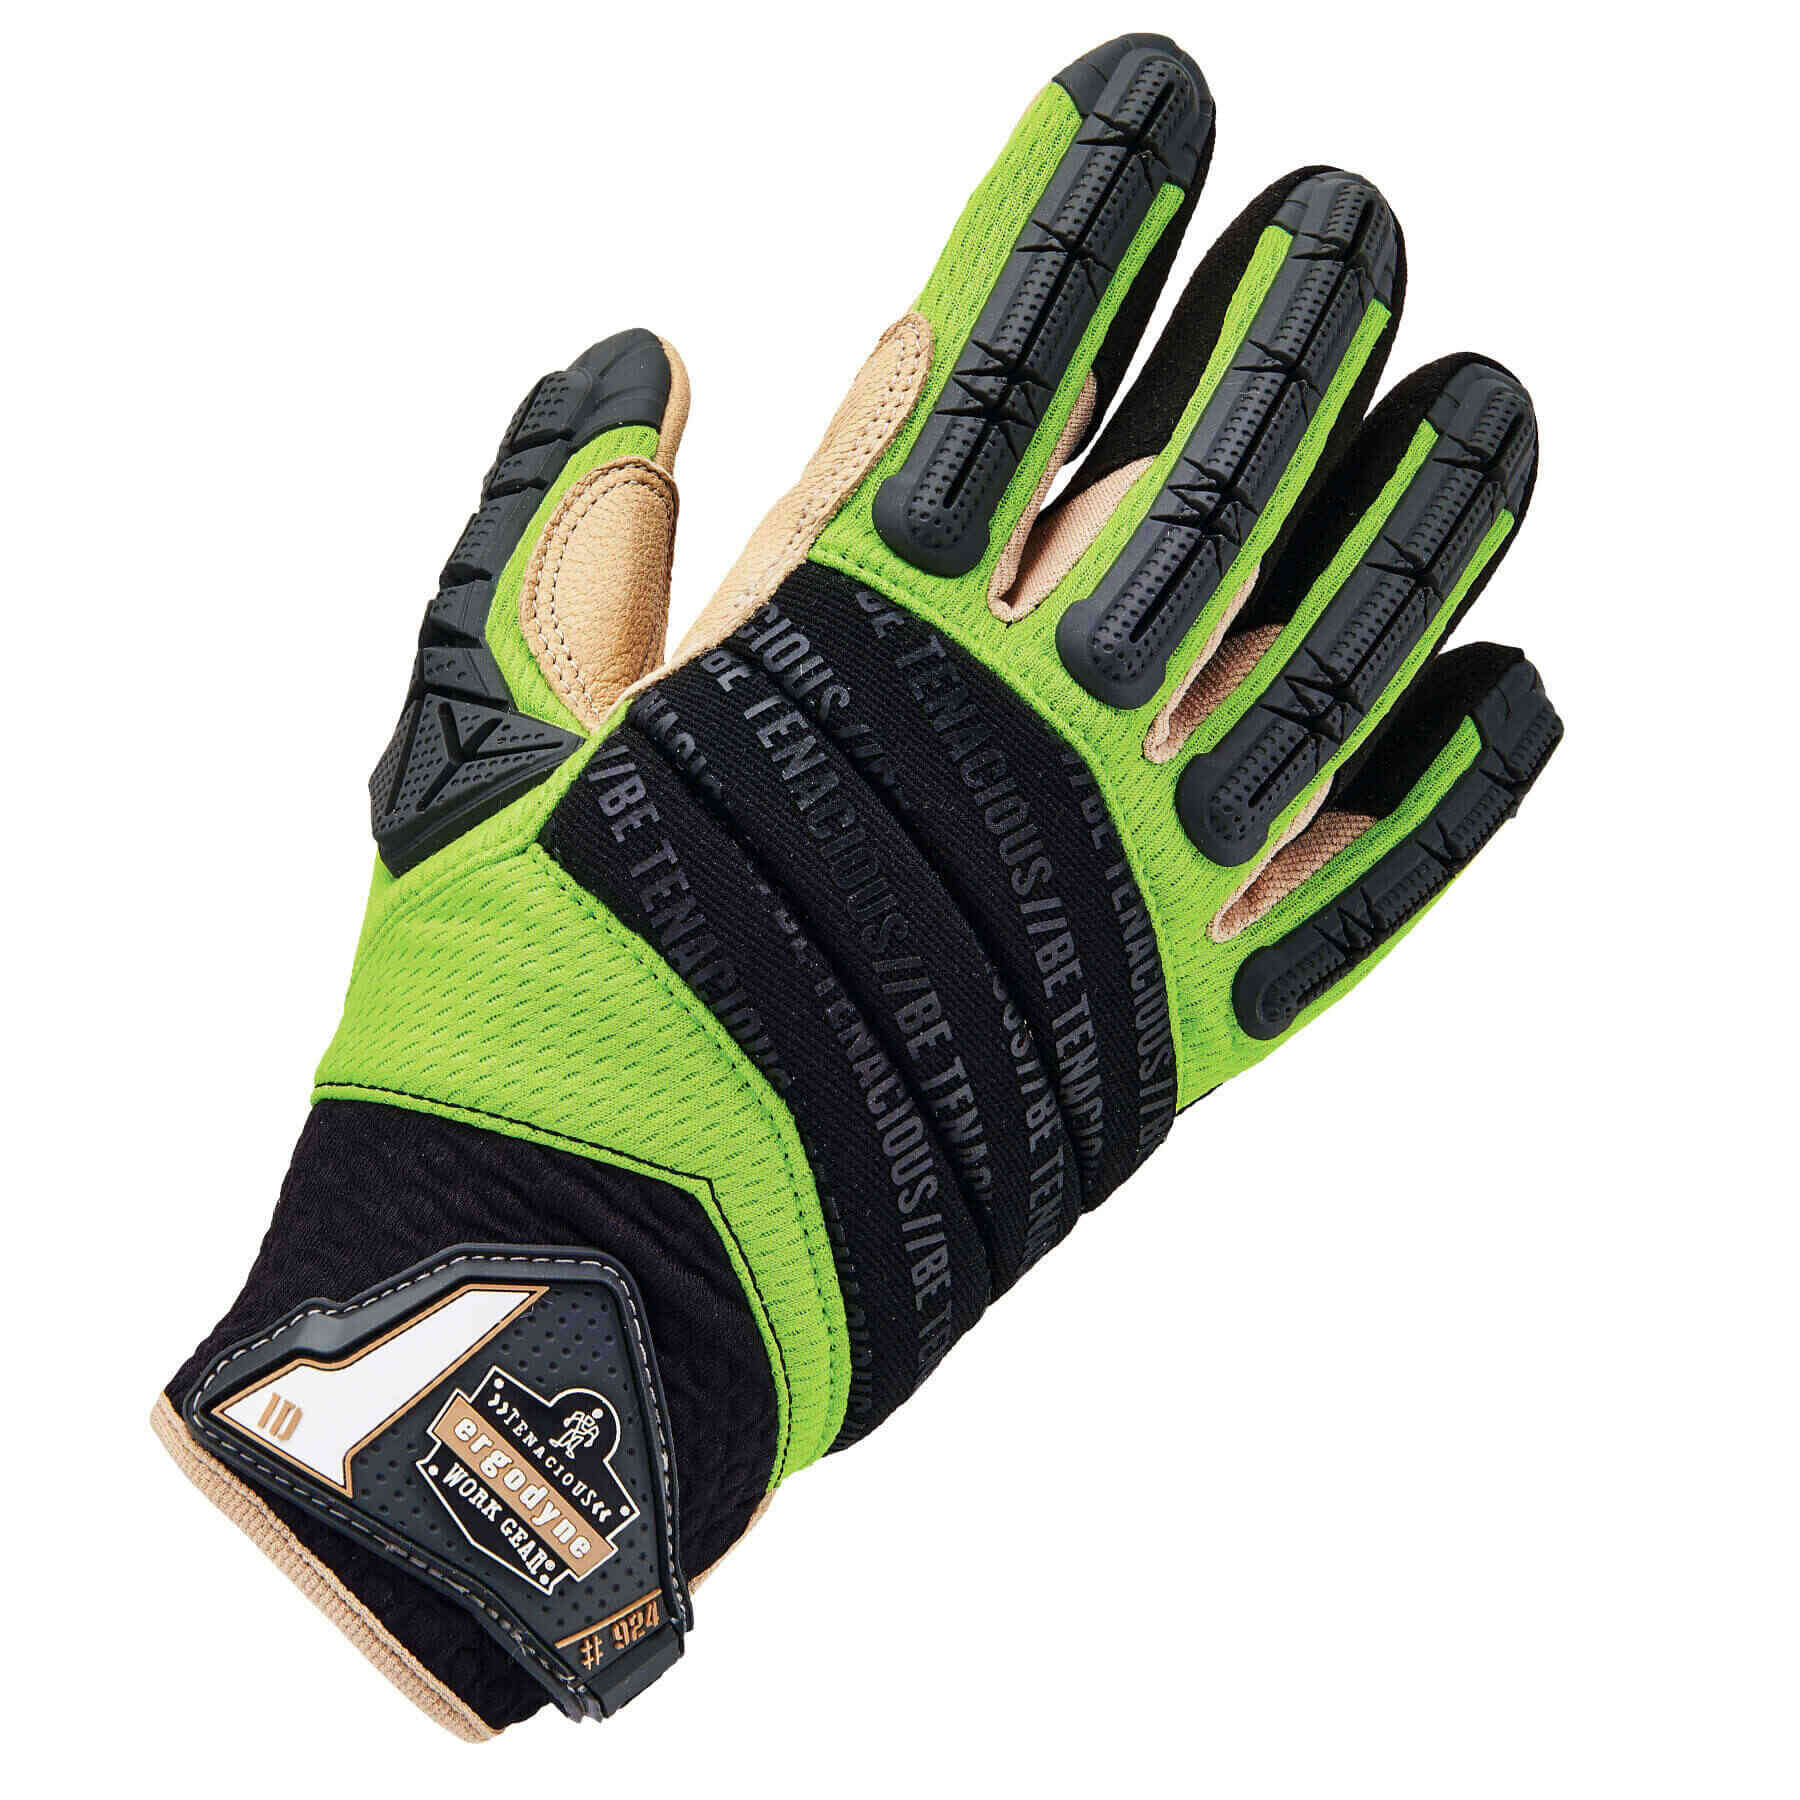 Leather-Reinforced Hybrid DIR Gloves